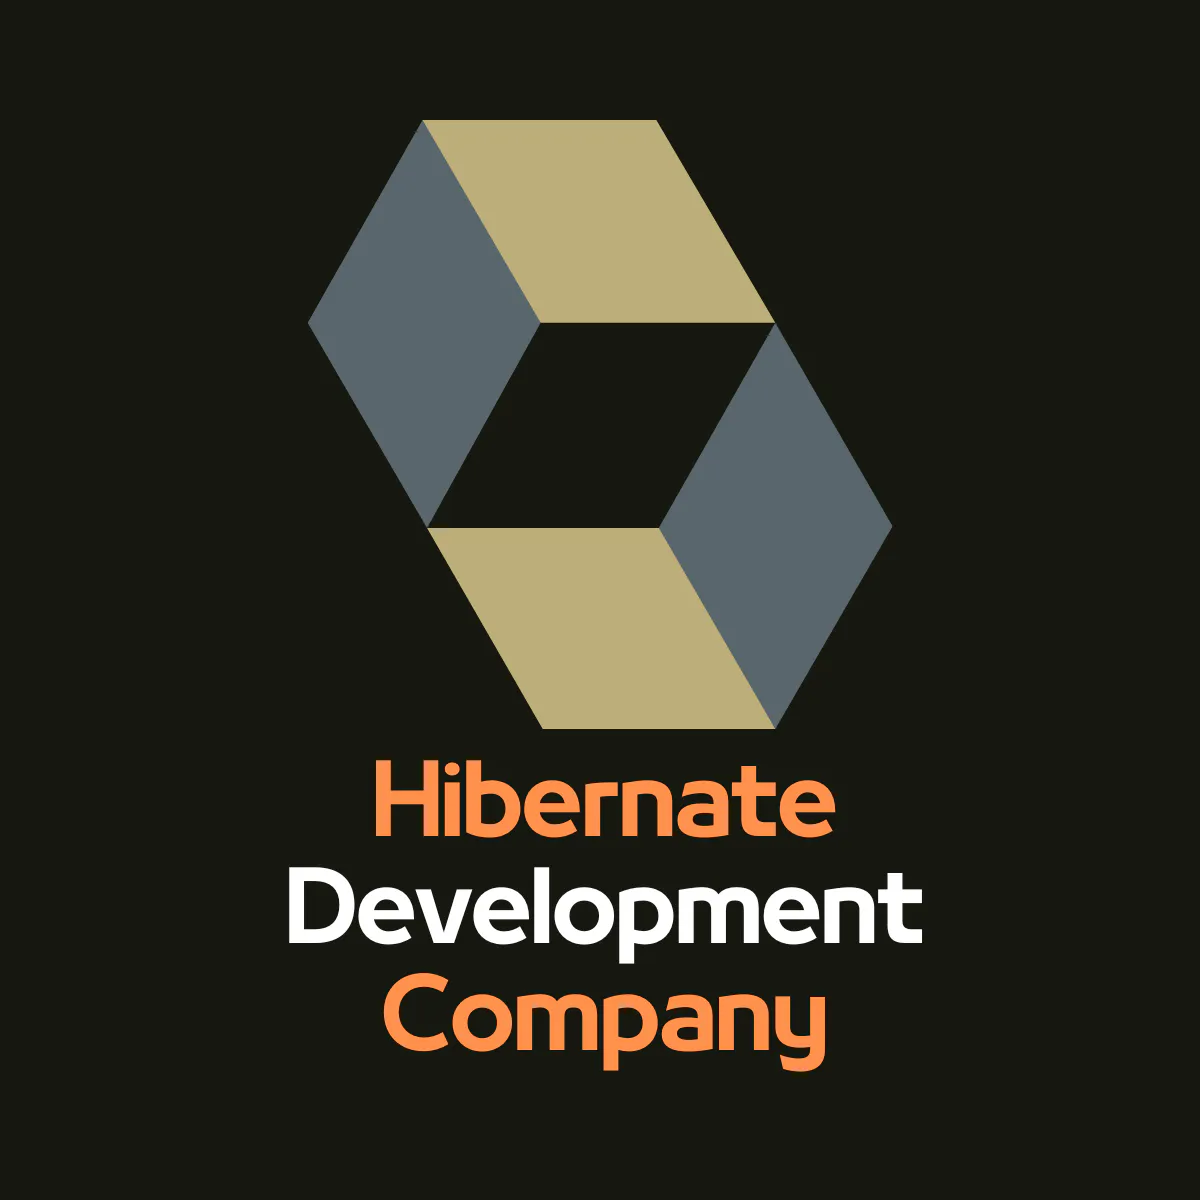 Hibernate Development